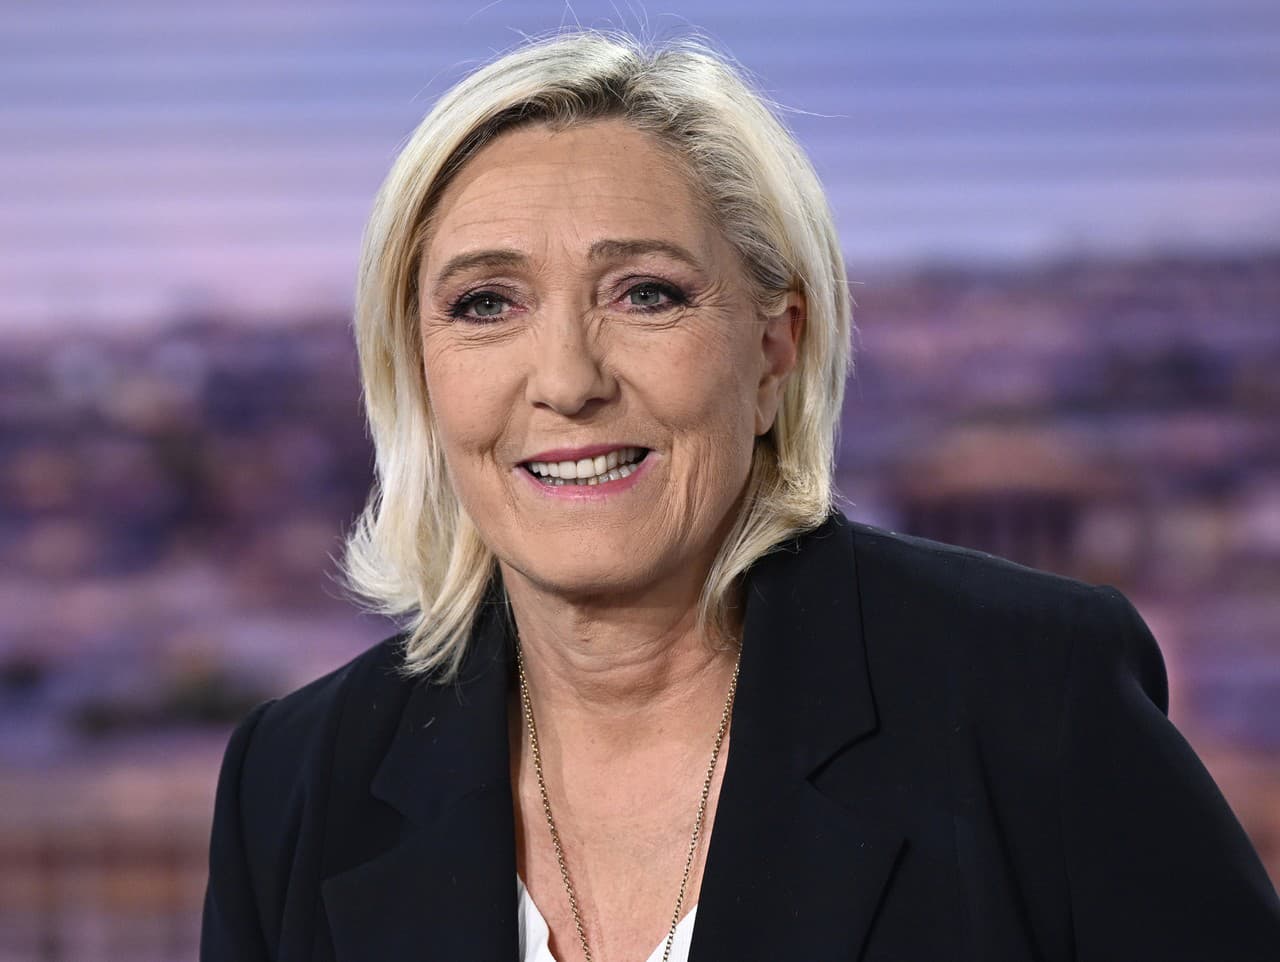  Marine Le Penová